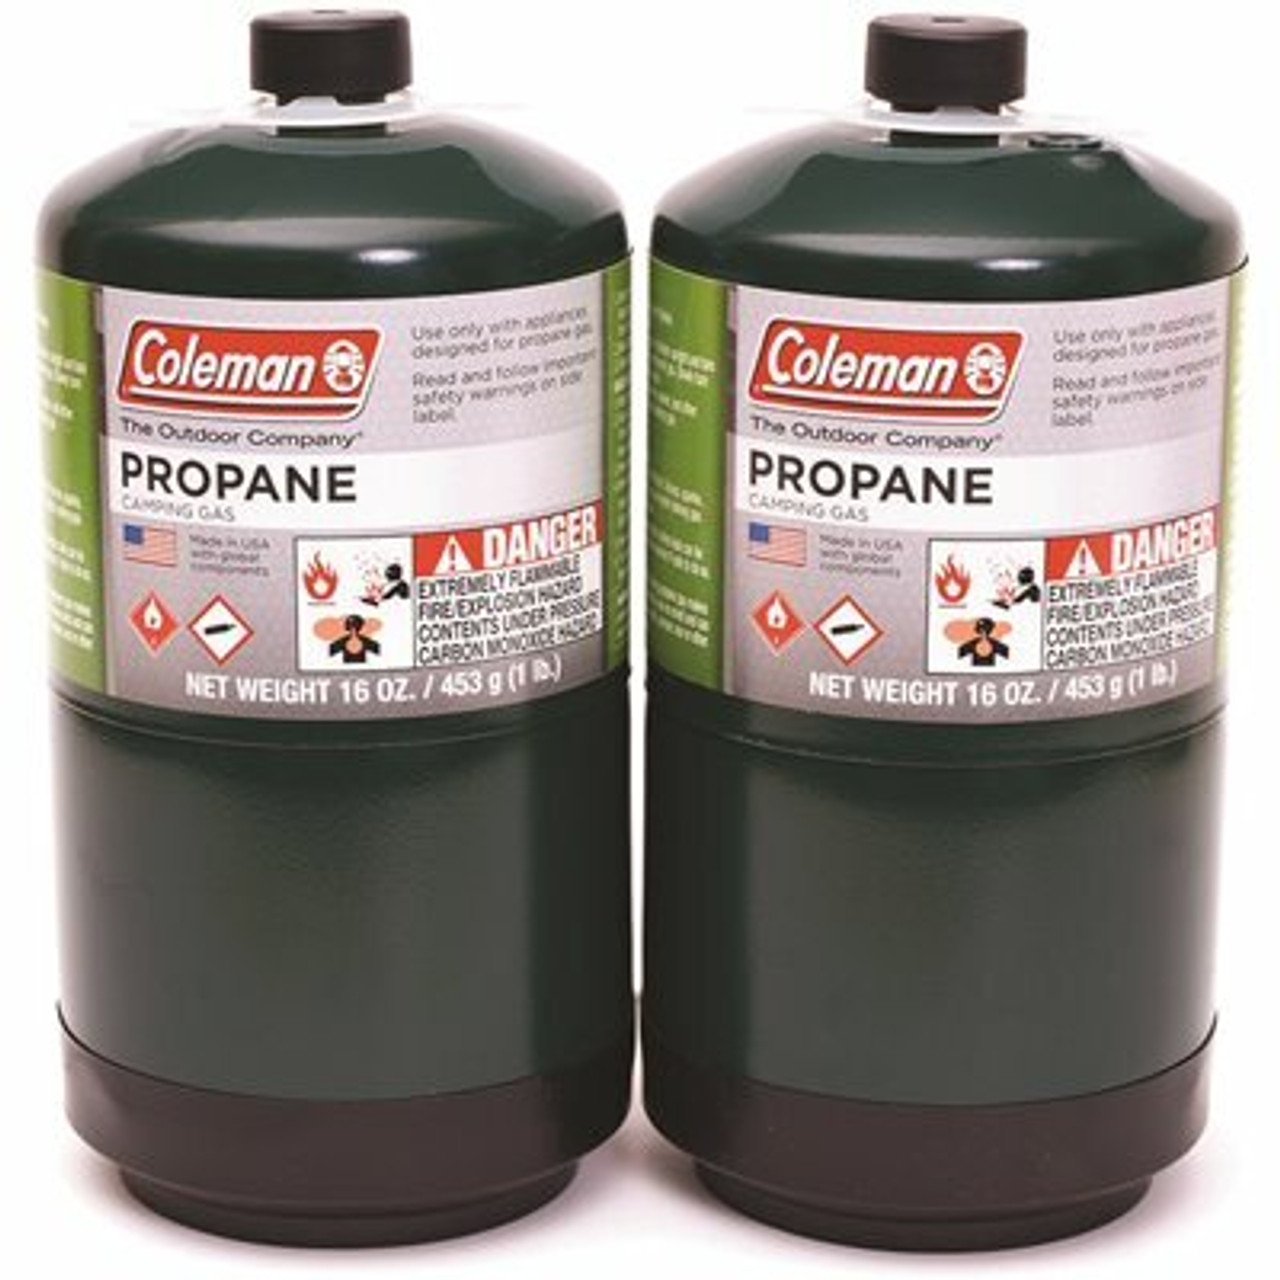 Coleman 1 Lb. Coleman Propane Gas Cylinder (2-Pack)